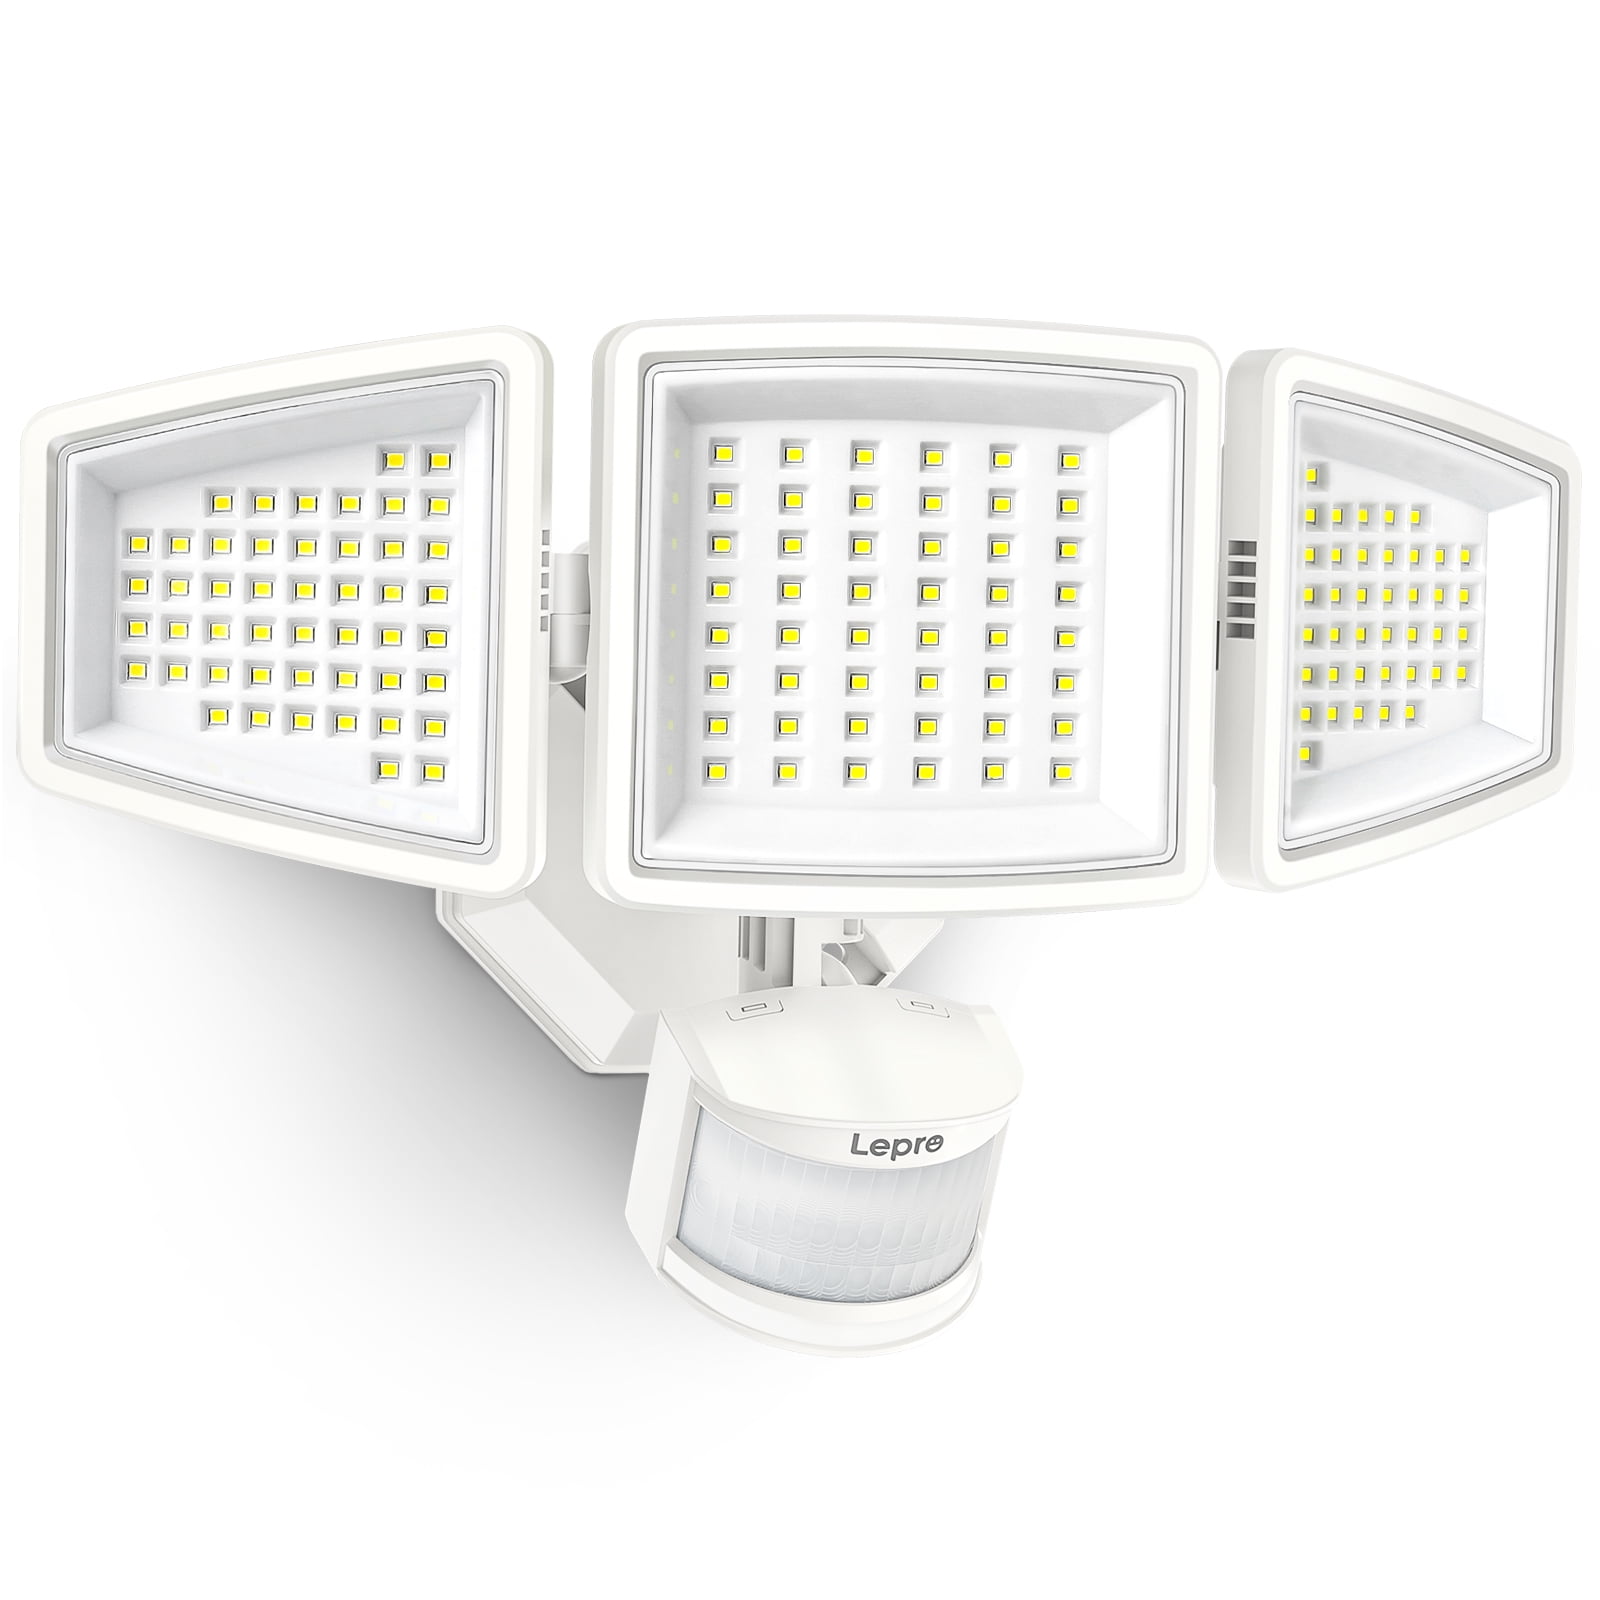 Lumenology Dual LED Motion Light (White)